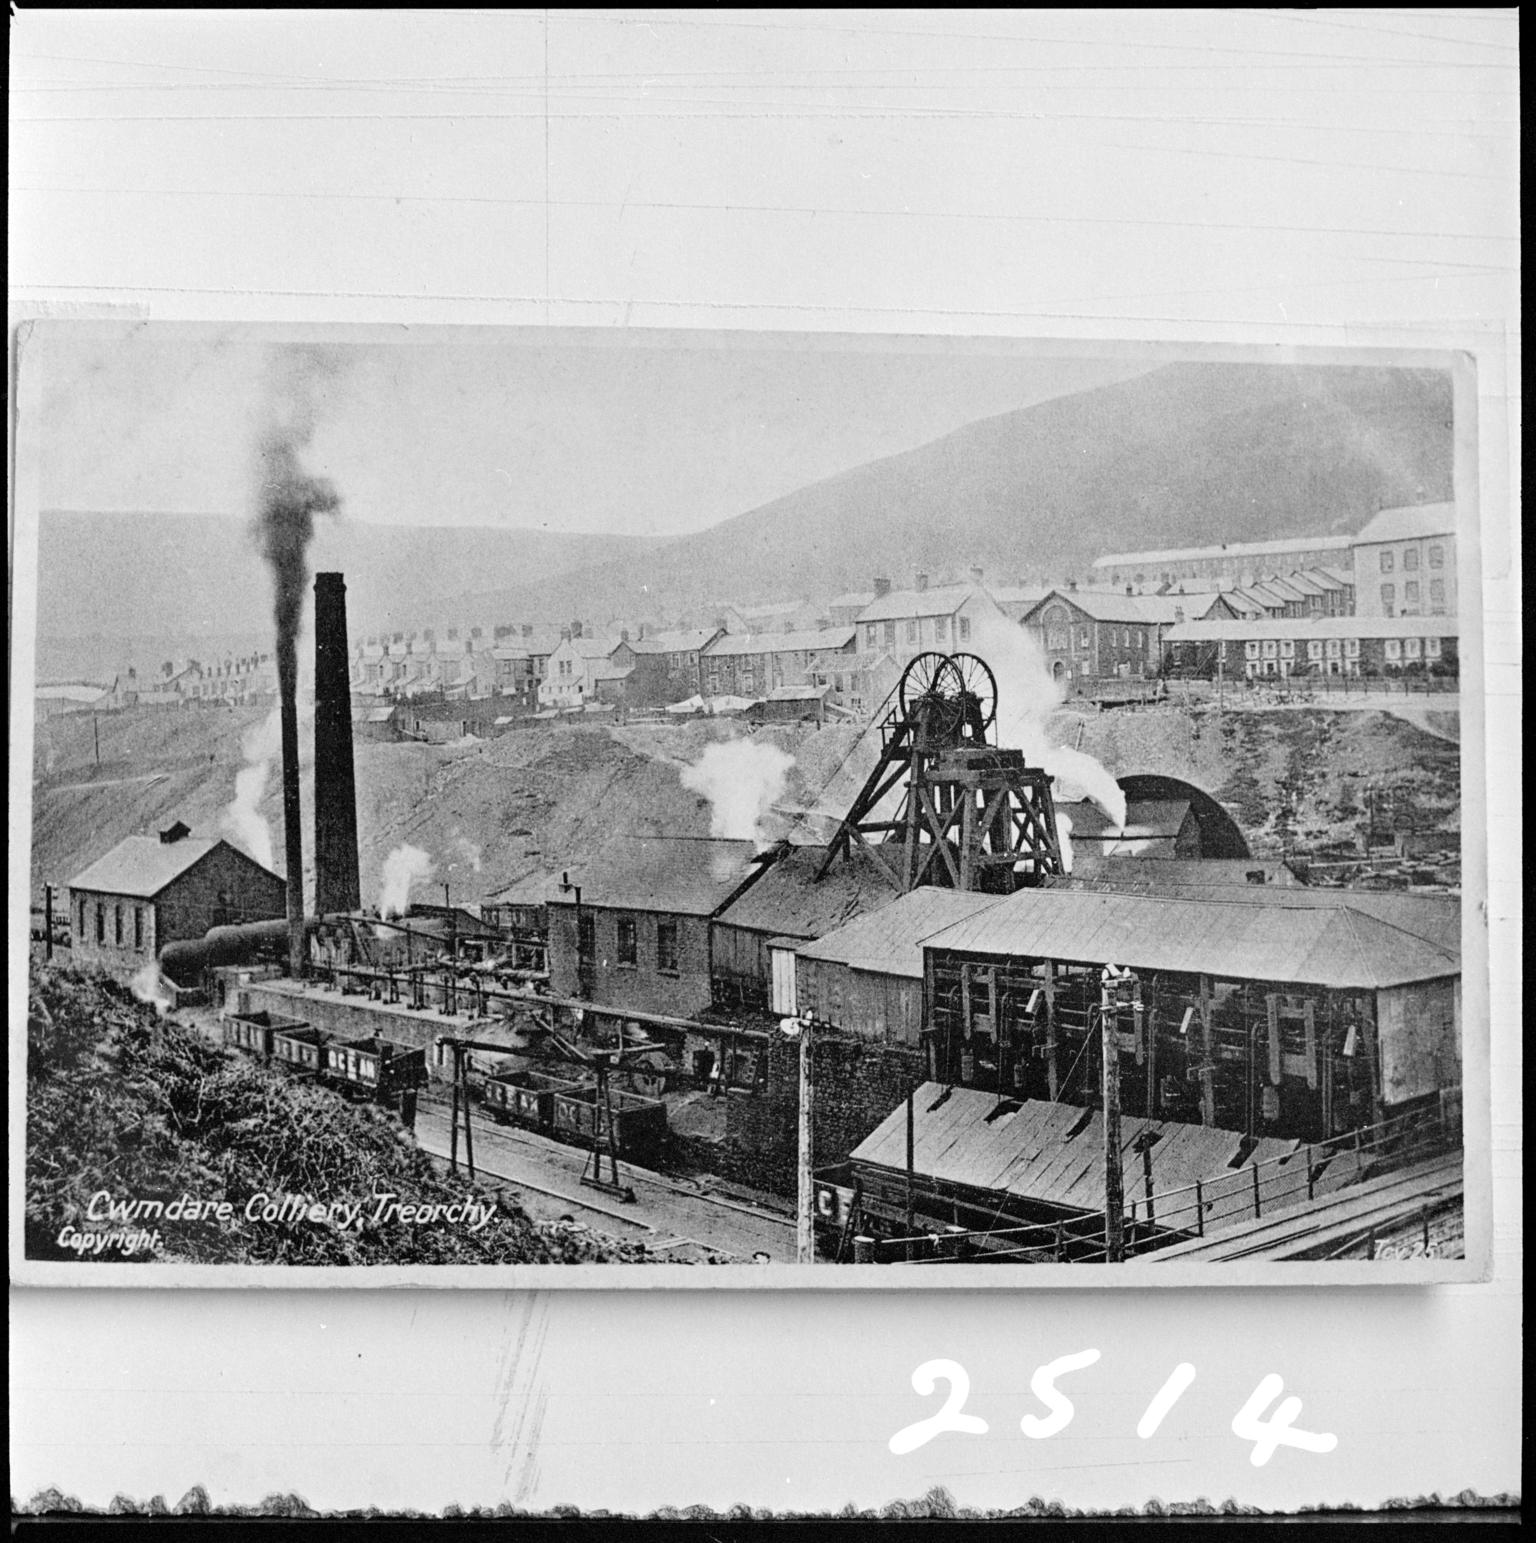 Cwmdare Colliery, film negative